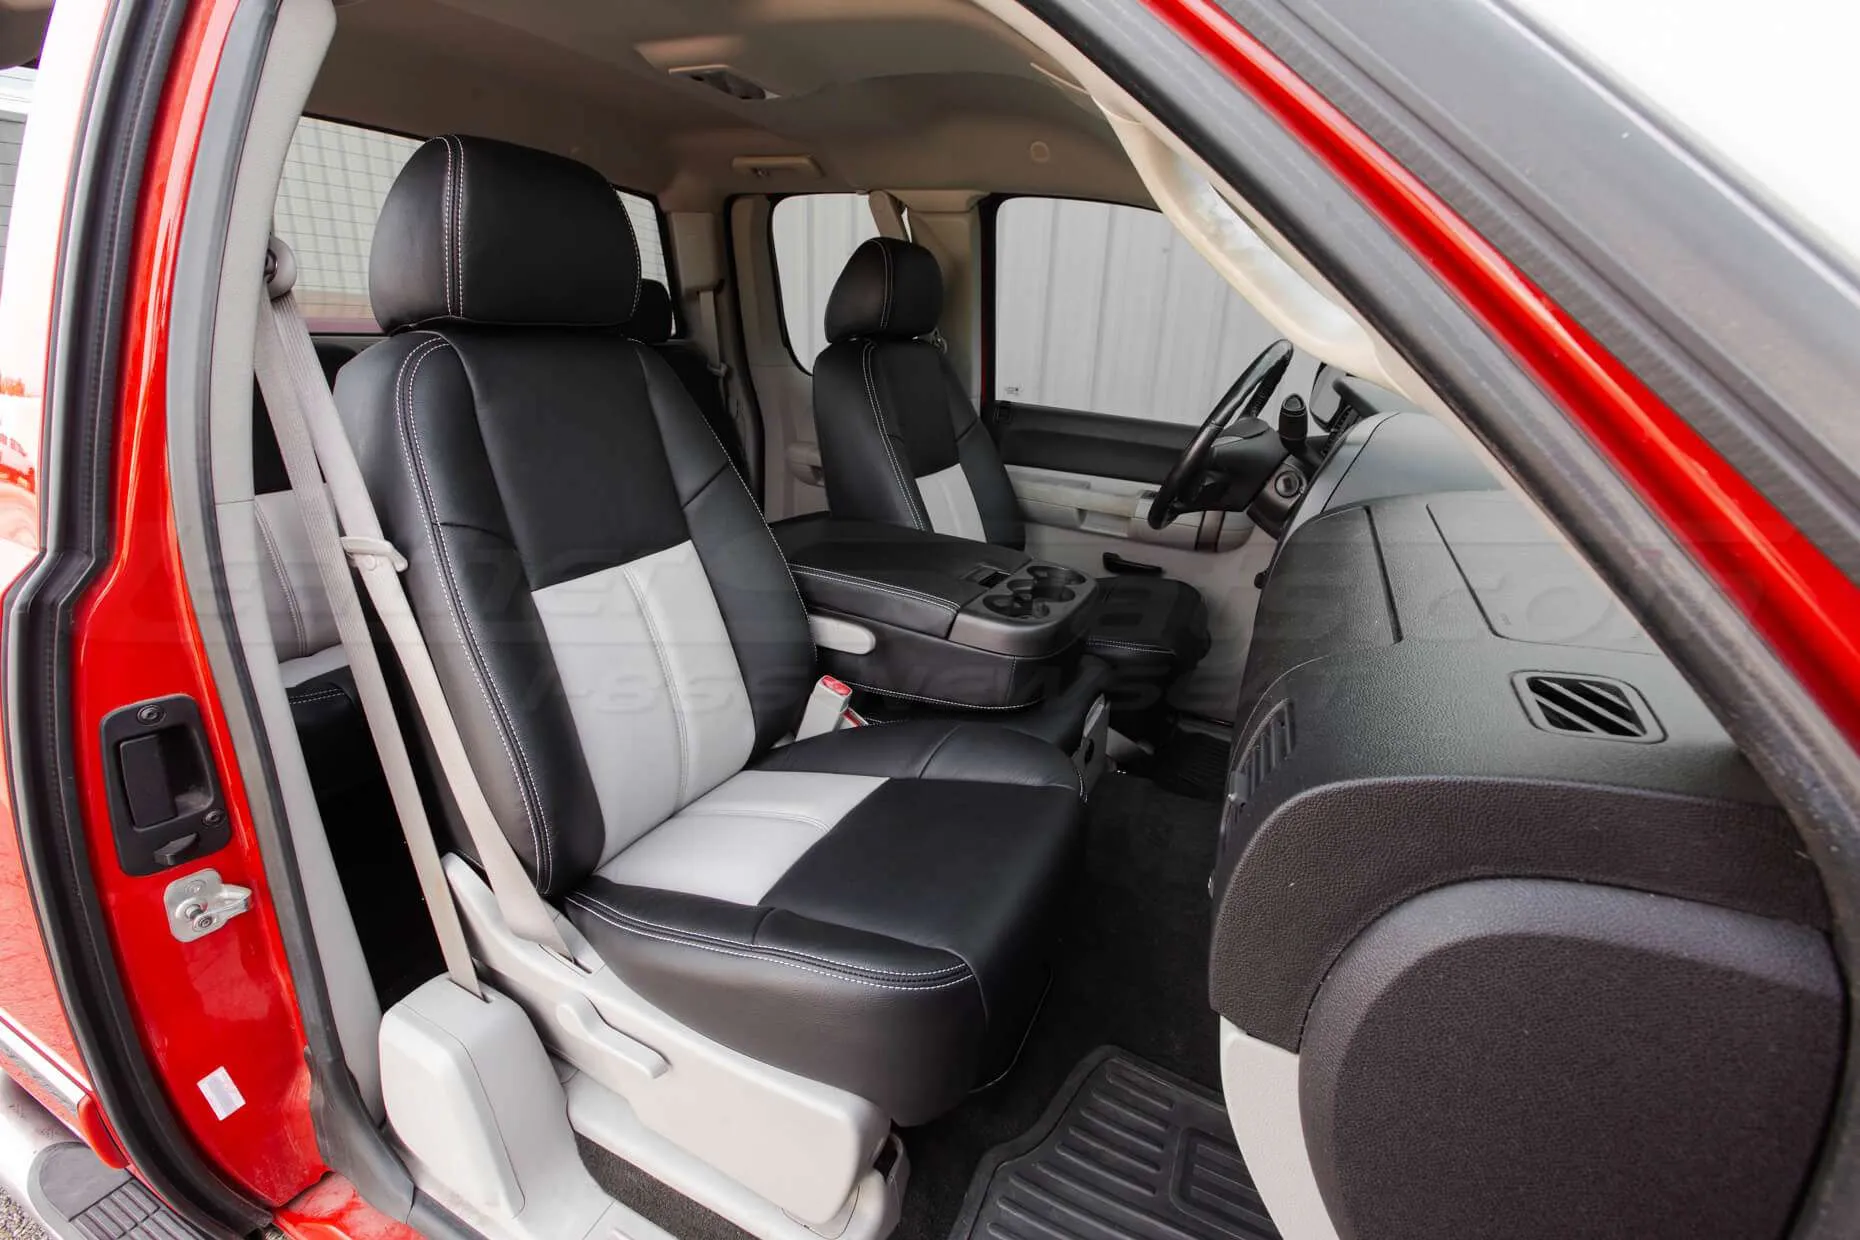 2003-2007 Chevrolet Silverado Upholstery Kit - Black & Dove Grey - Installed - Front passenger seat